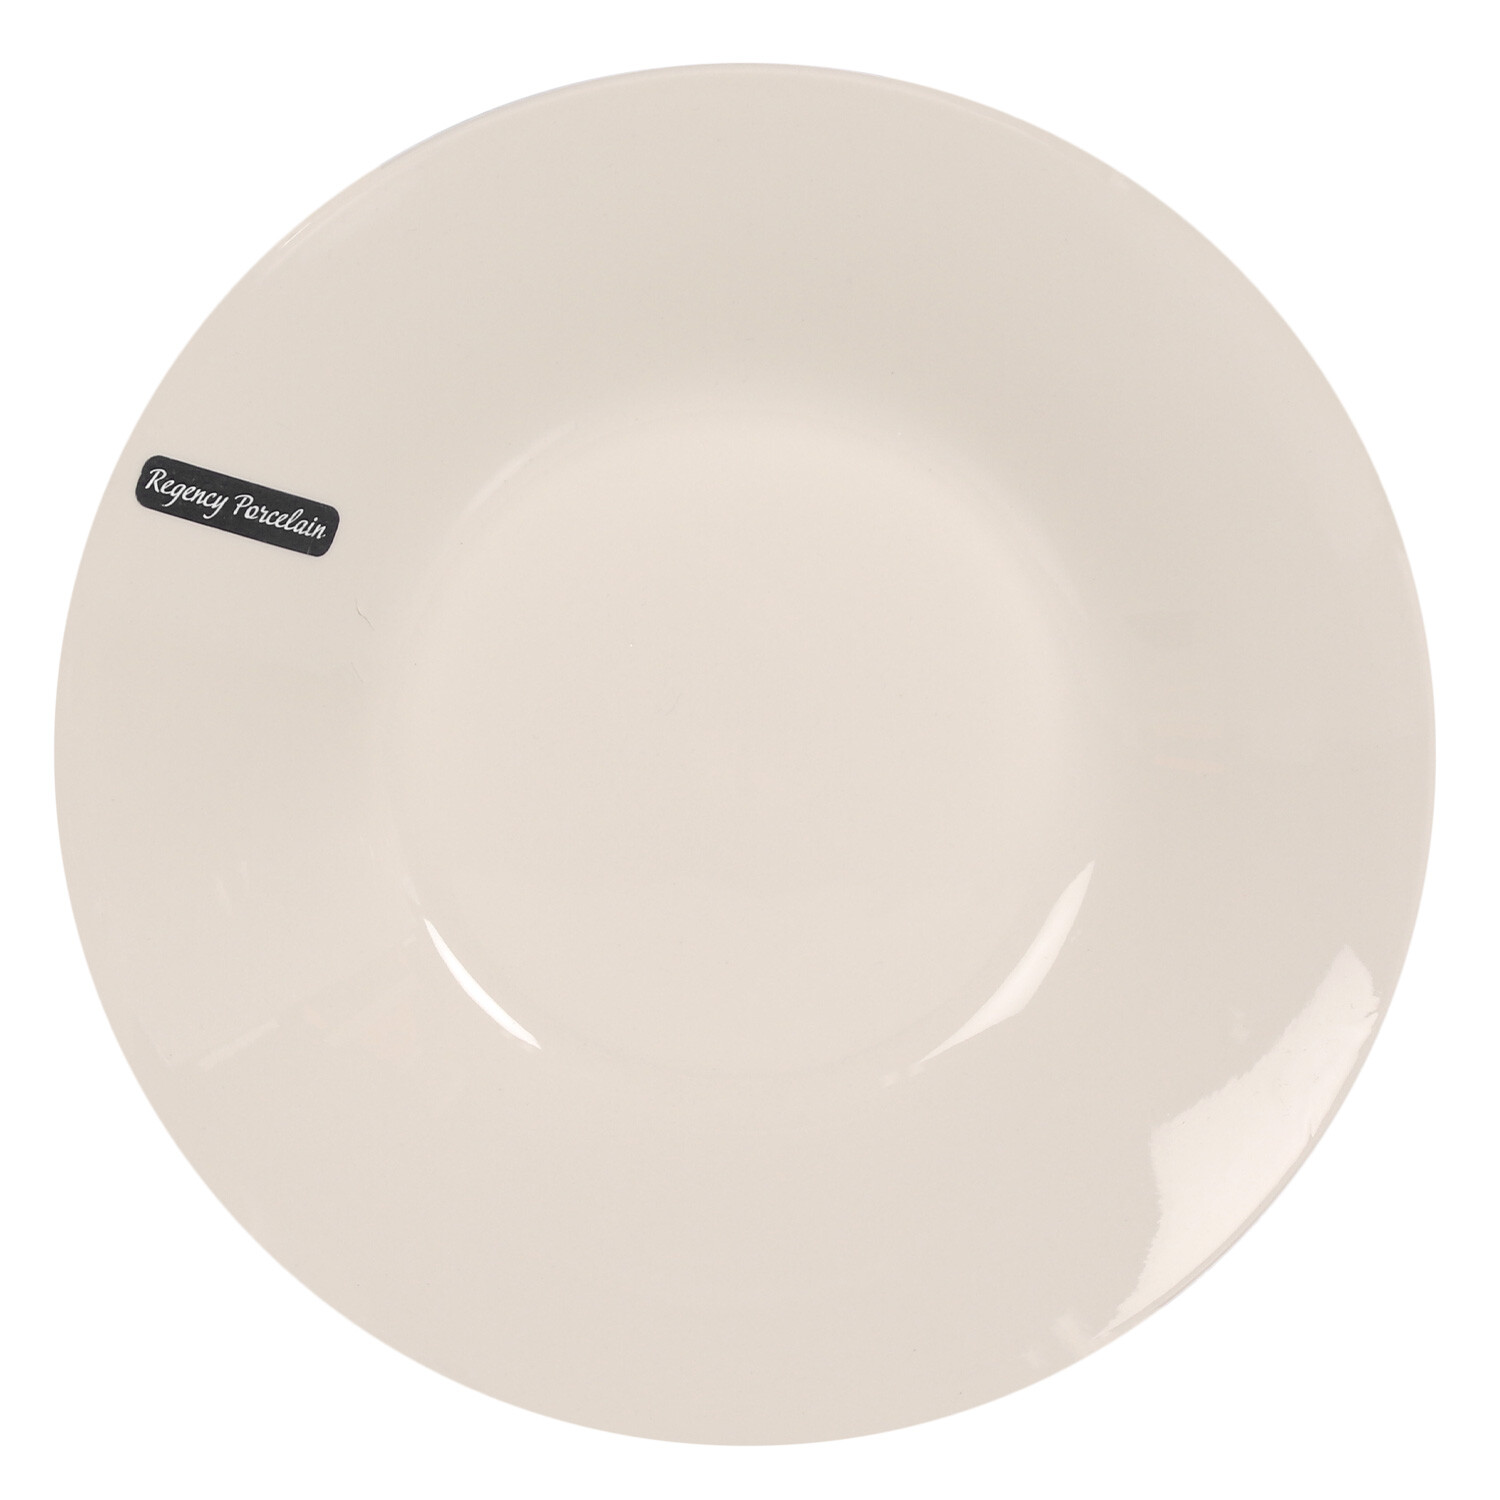 Regency Porcelain Soup Plate - White Image 1